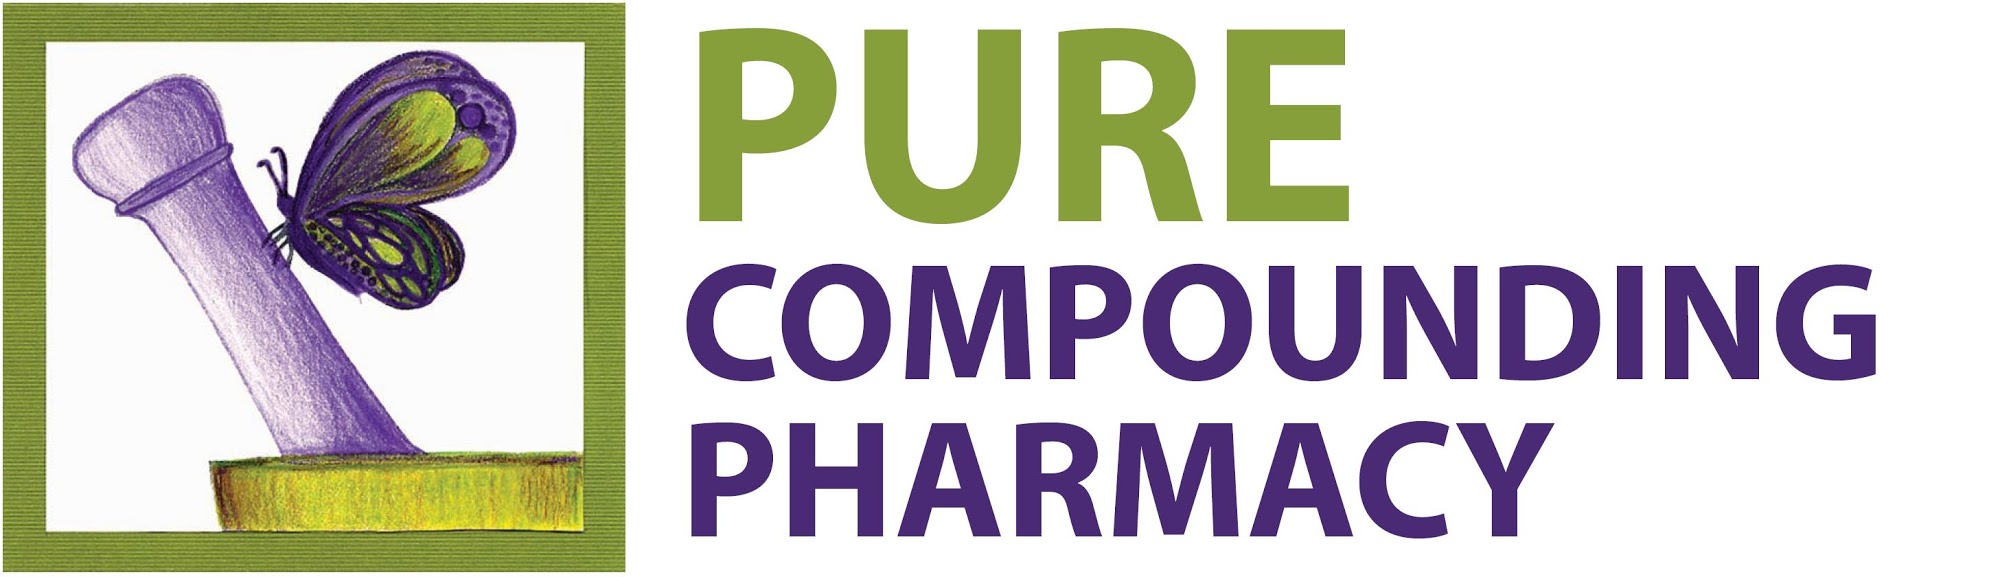 Pure Compounding Pharmacy